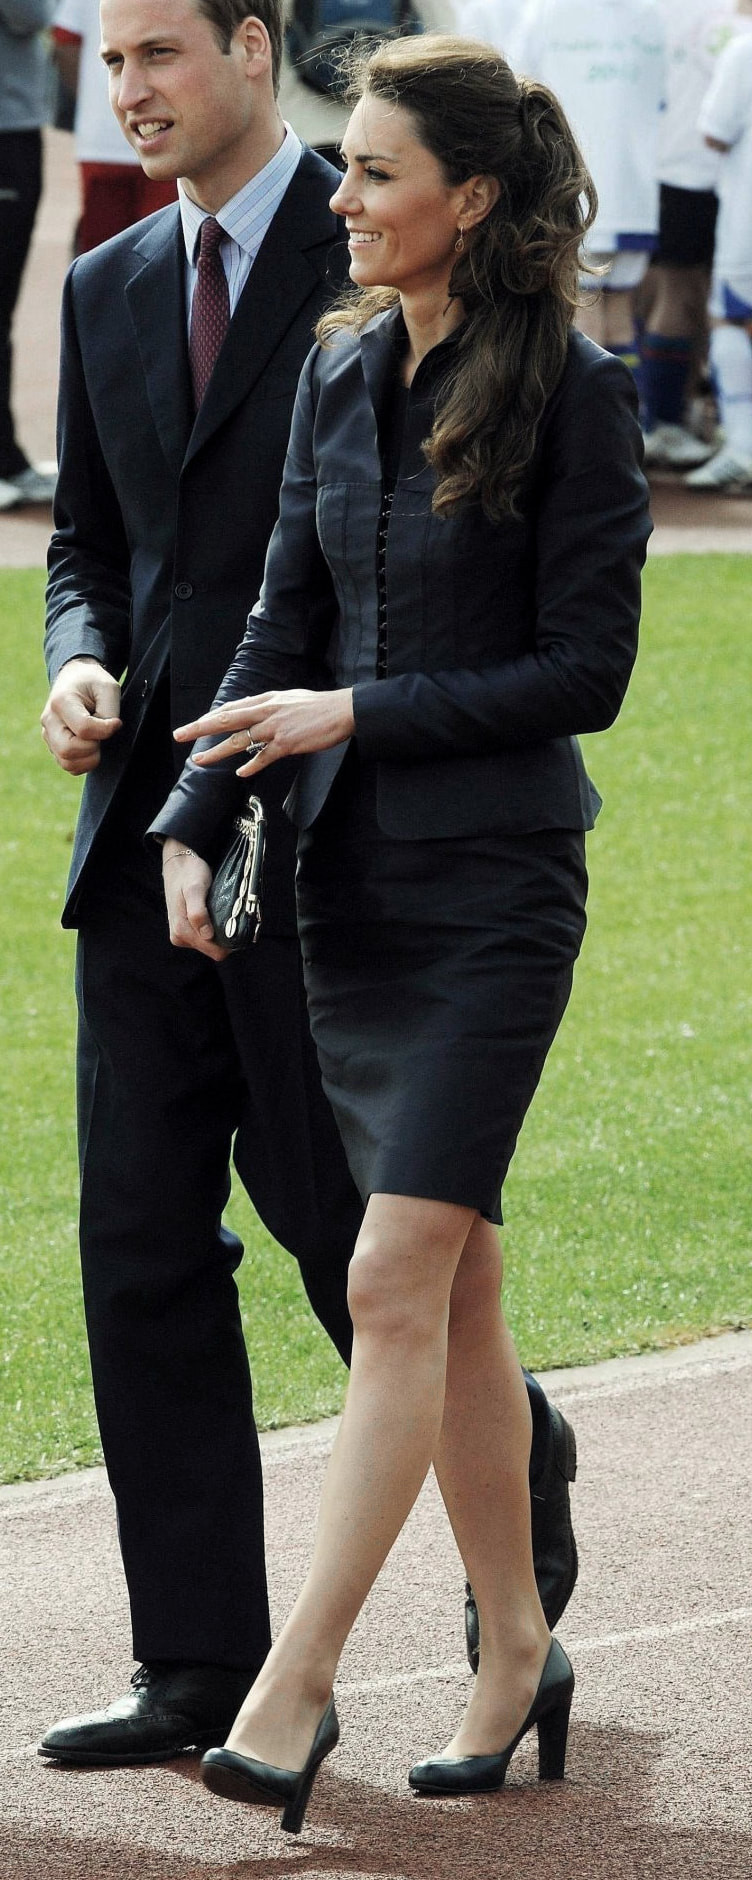 L.K.Bennett Art Navy Leather Pumps as seen on Kate Middleton, The Duchess of Cambridge.